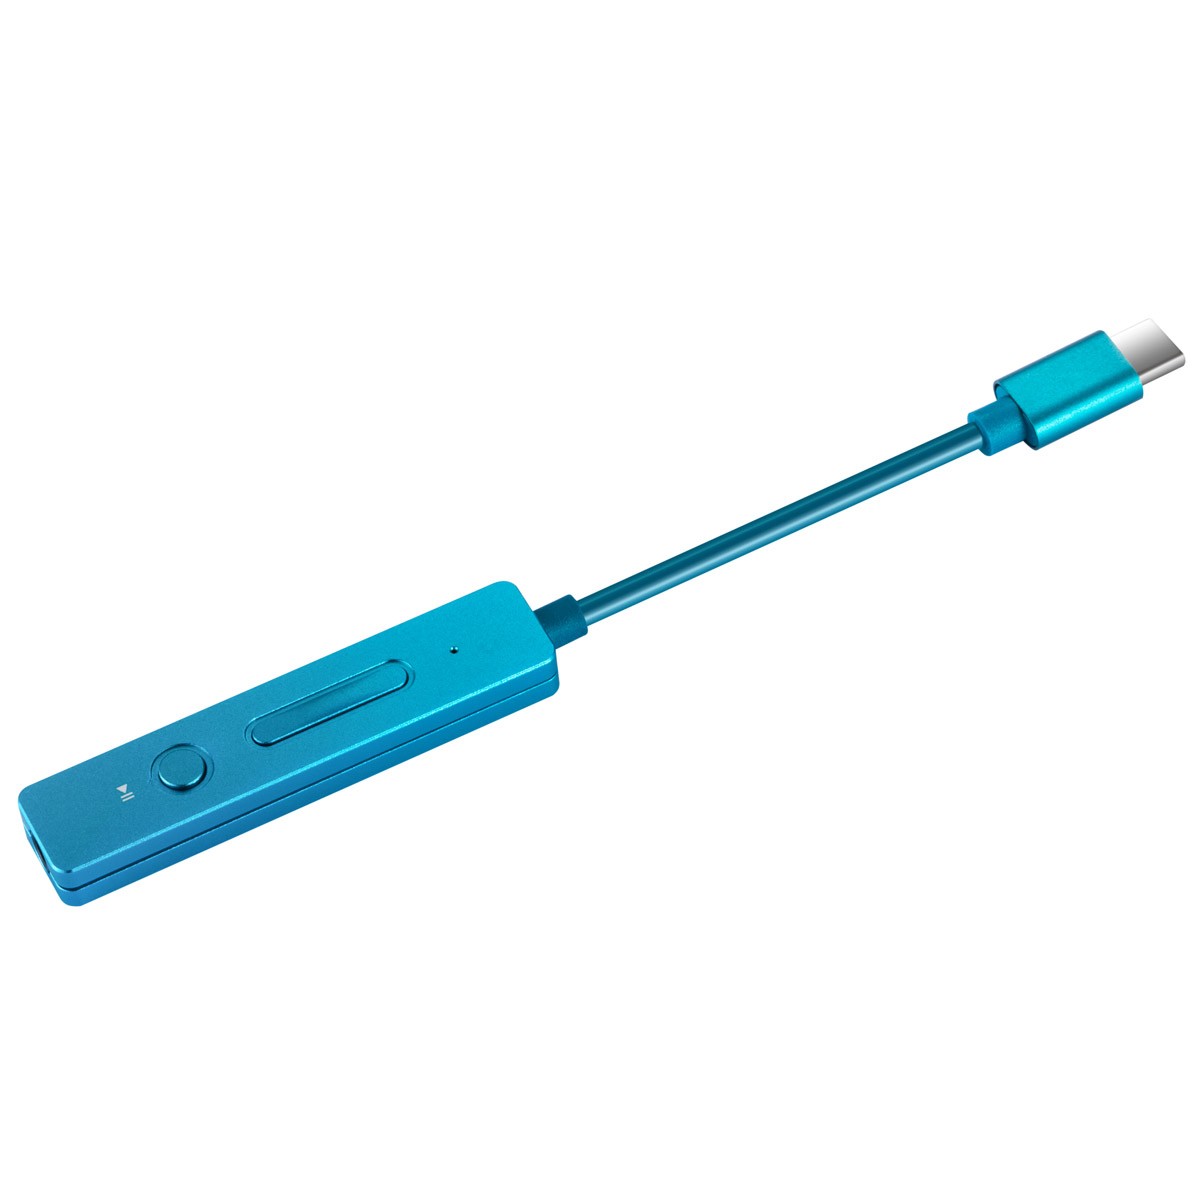 XDUOO LINK V2 Portable USB DAC CS43131 32bit 384kHz DSD256 Blue